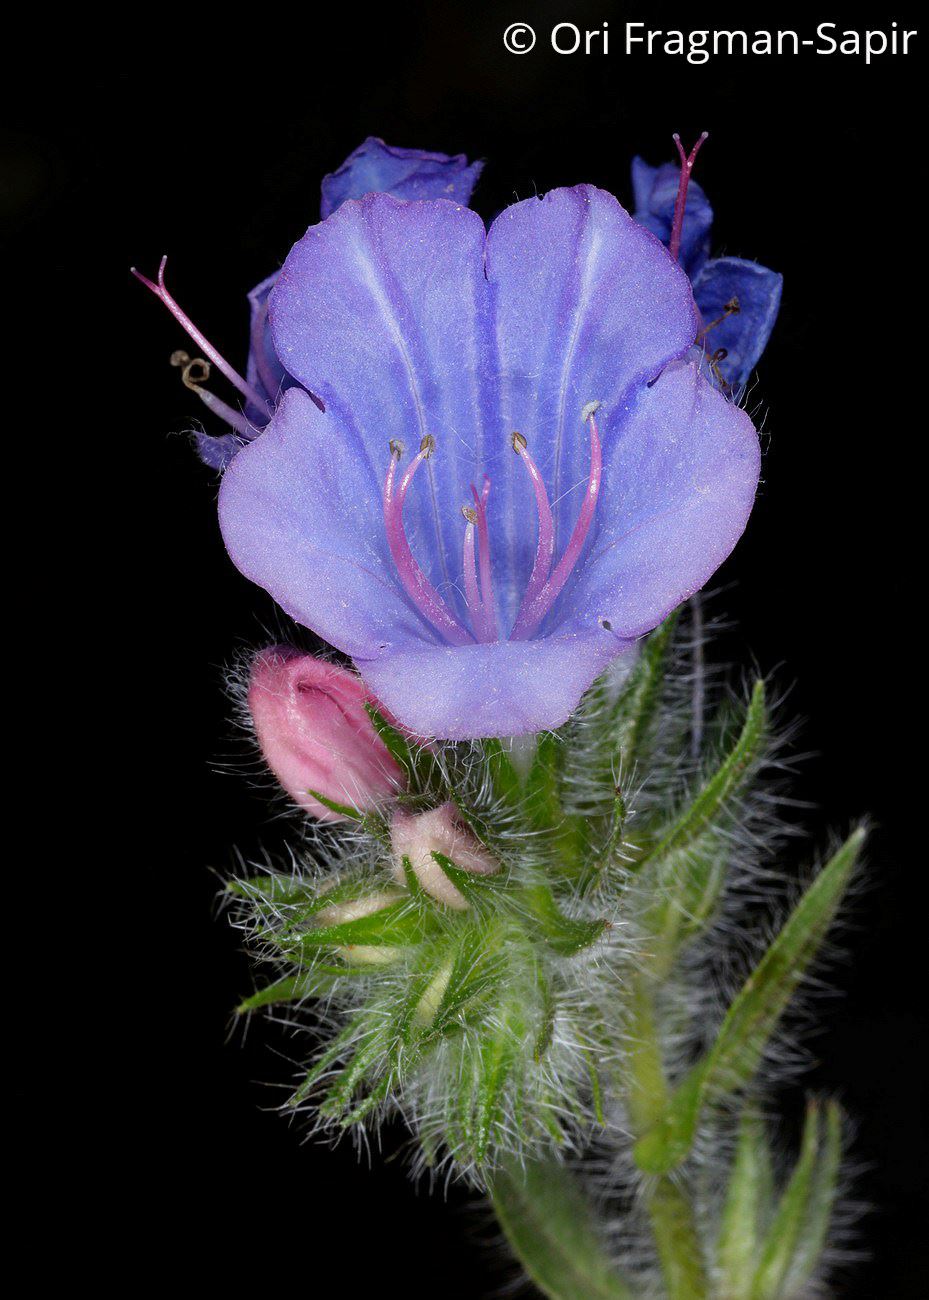 Echium plantagineum - Purple Viper's Bugloss, Jersey Bugloss, Plantain-leaved Viper's Bugloss, עכנאי לחכי, עכנאי לחכי, עכנאי נאה (לחכי)